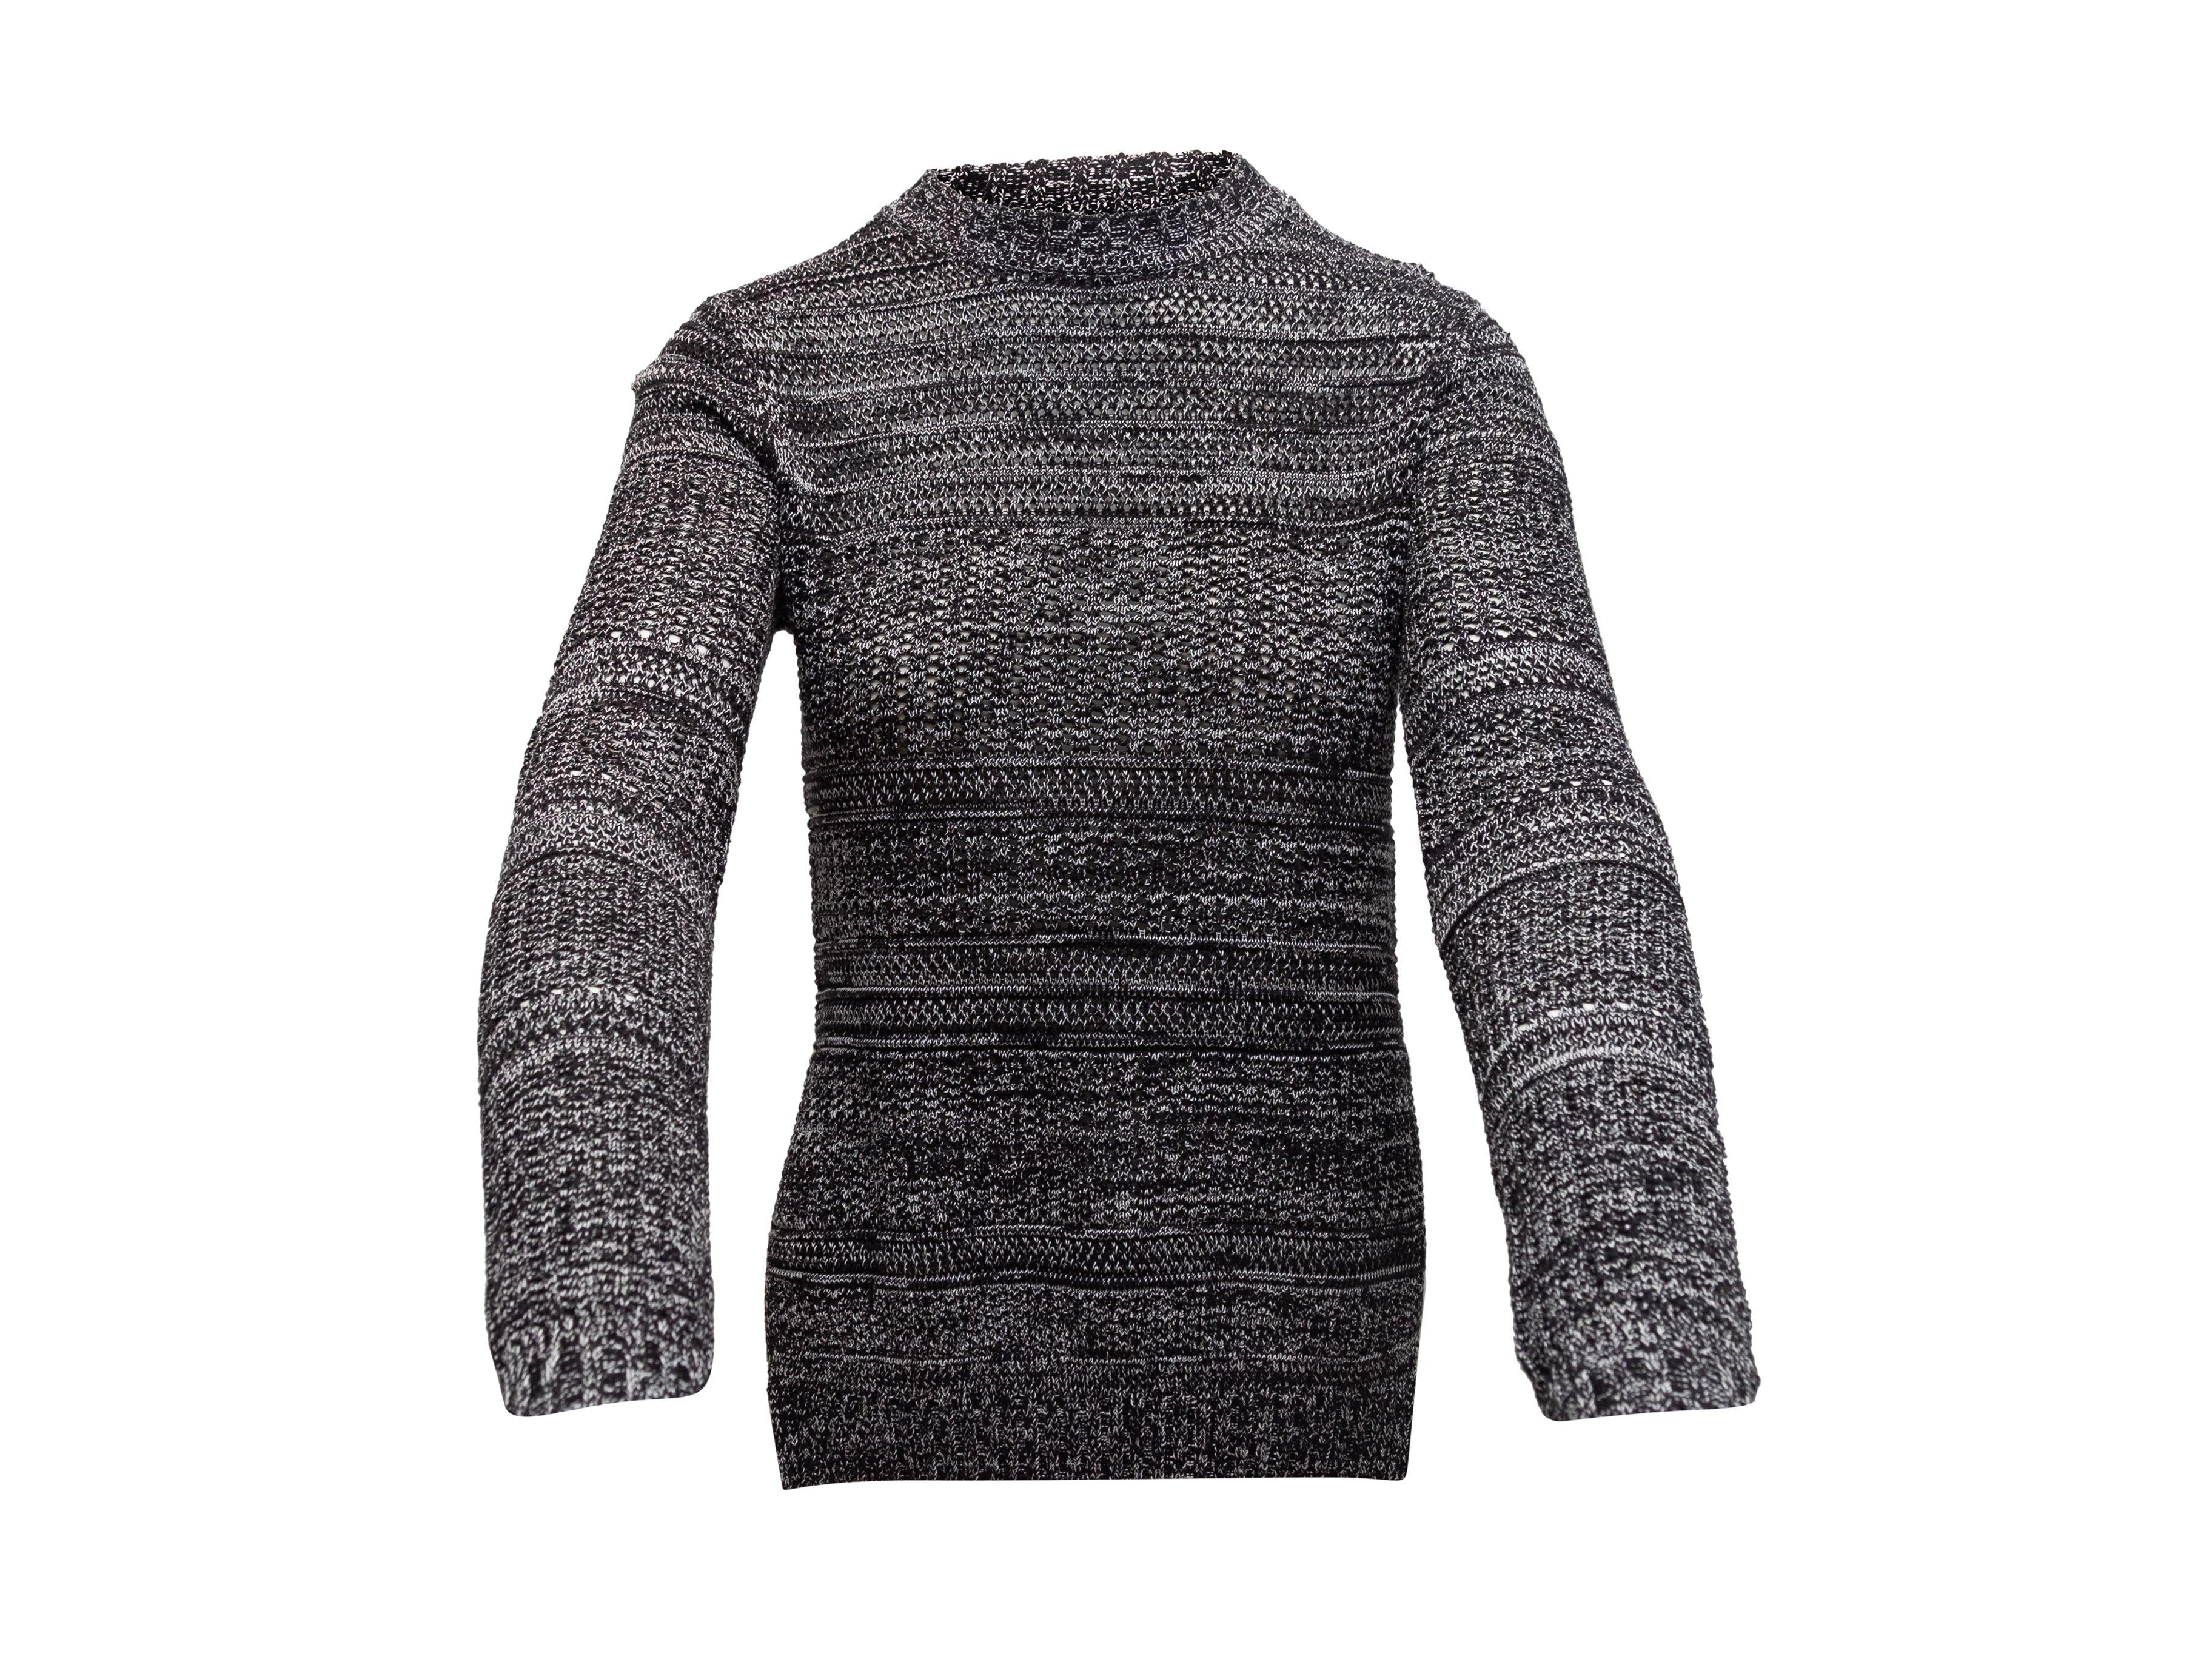 Proenza Schouler Black & White Silk-Blend Melange Sweater 3